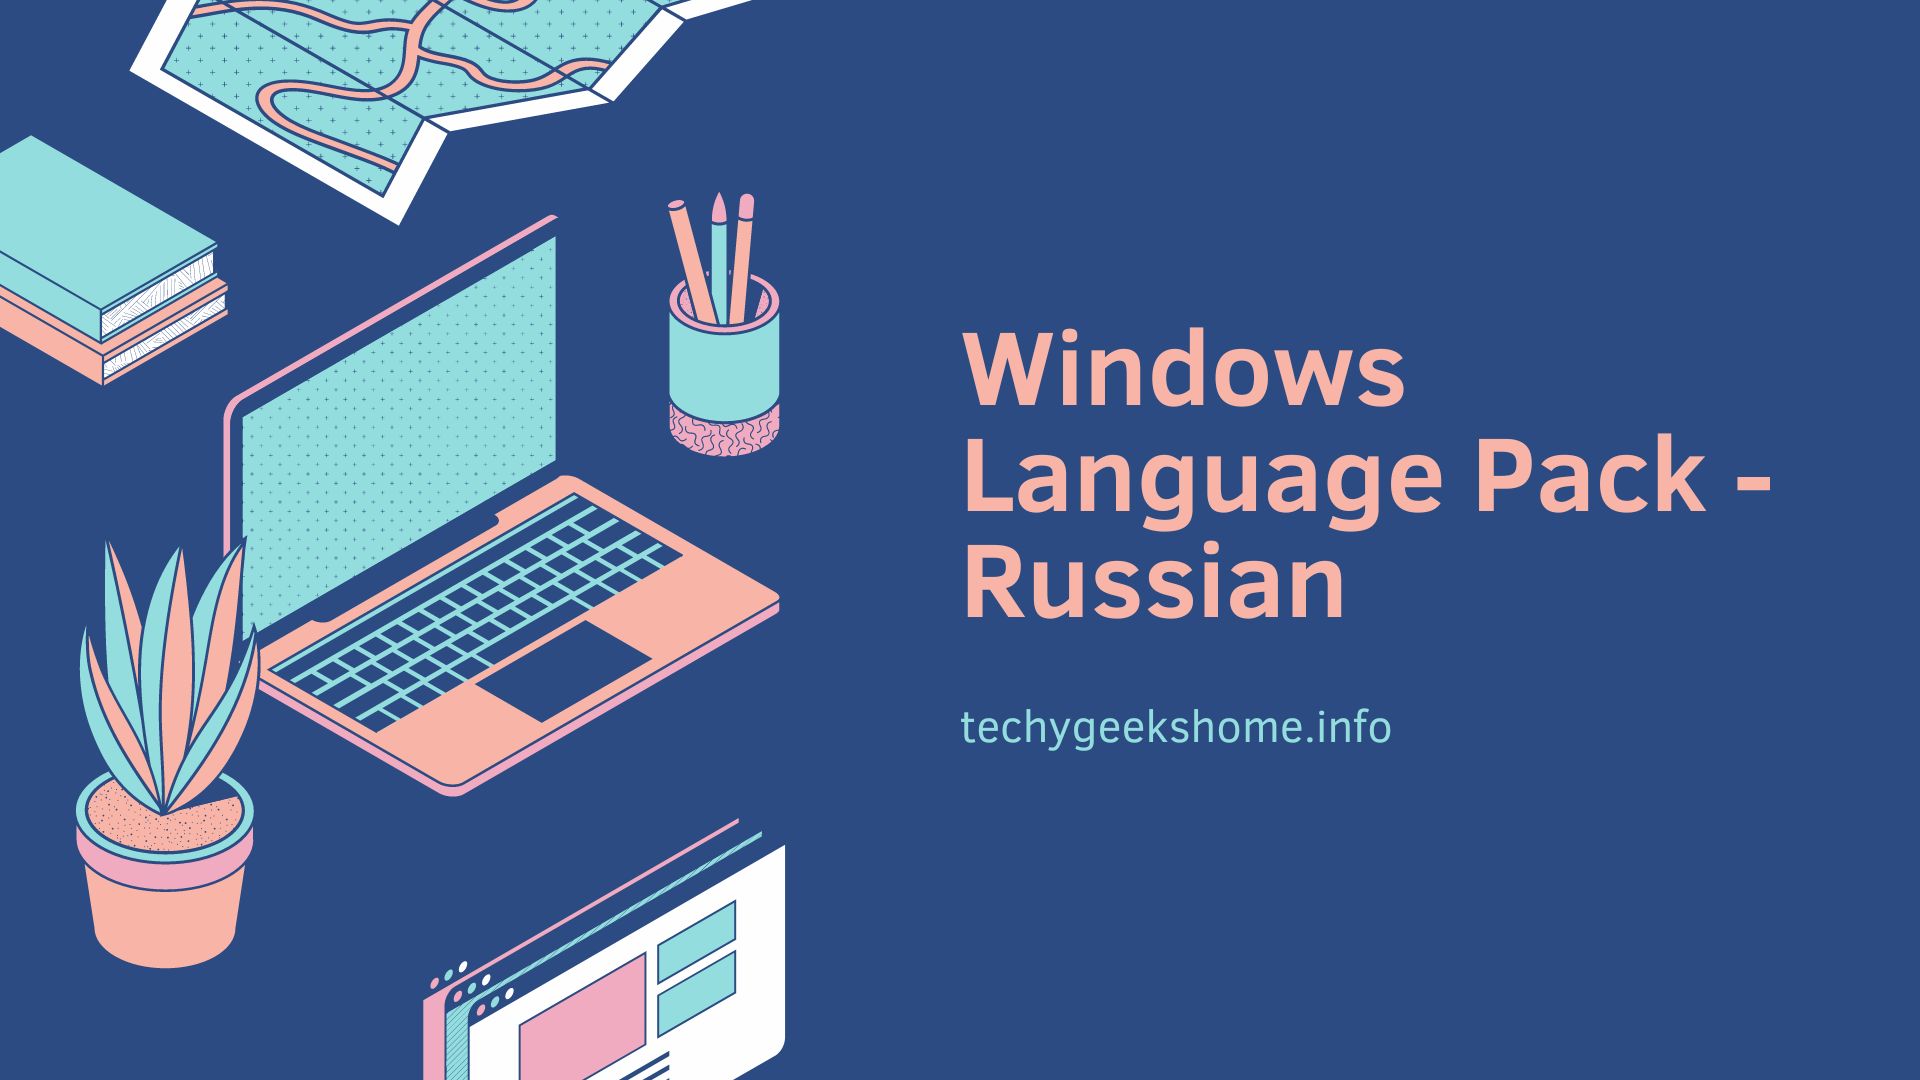 Windows Language Pack - Russian